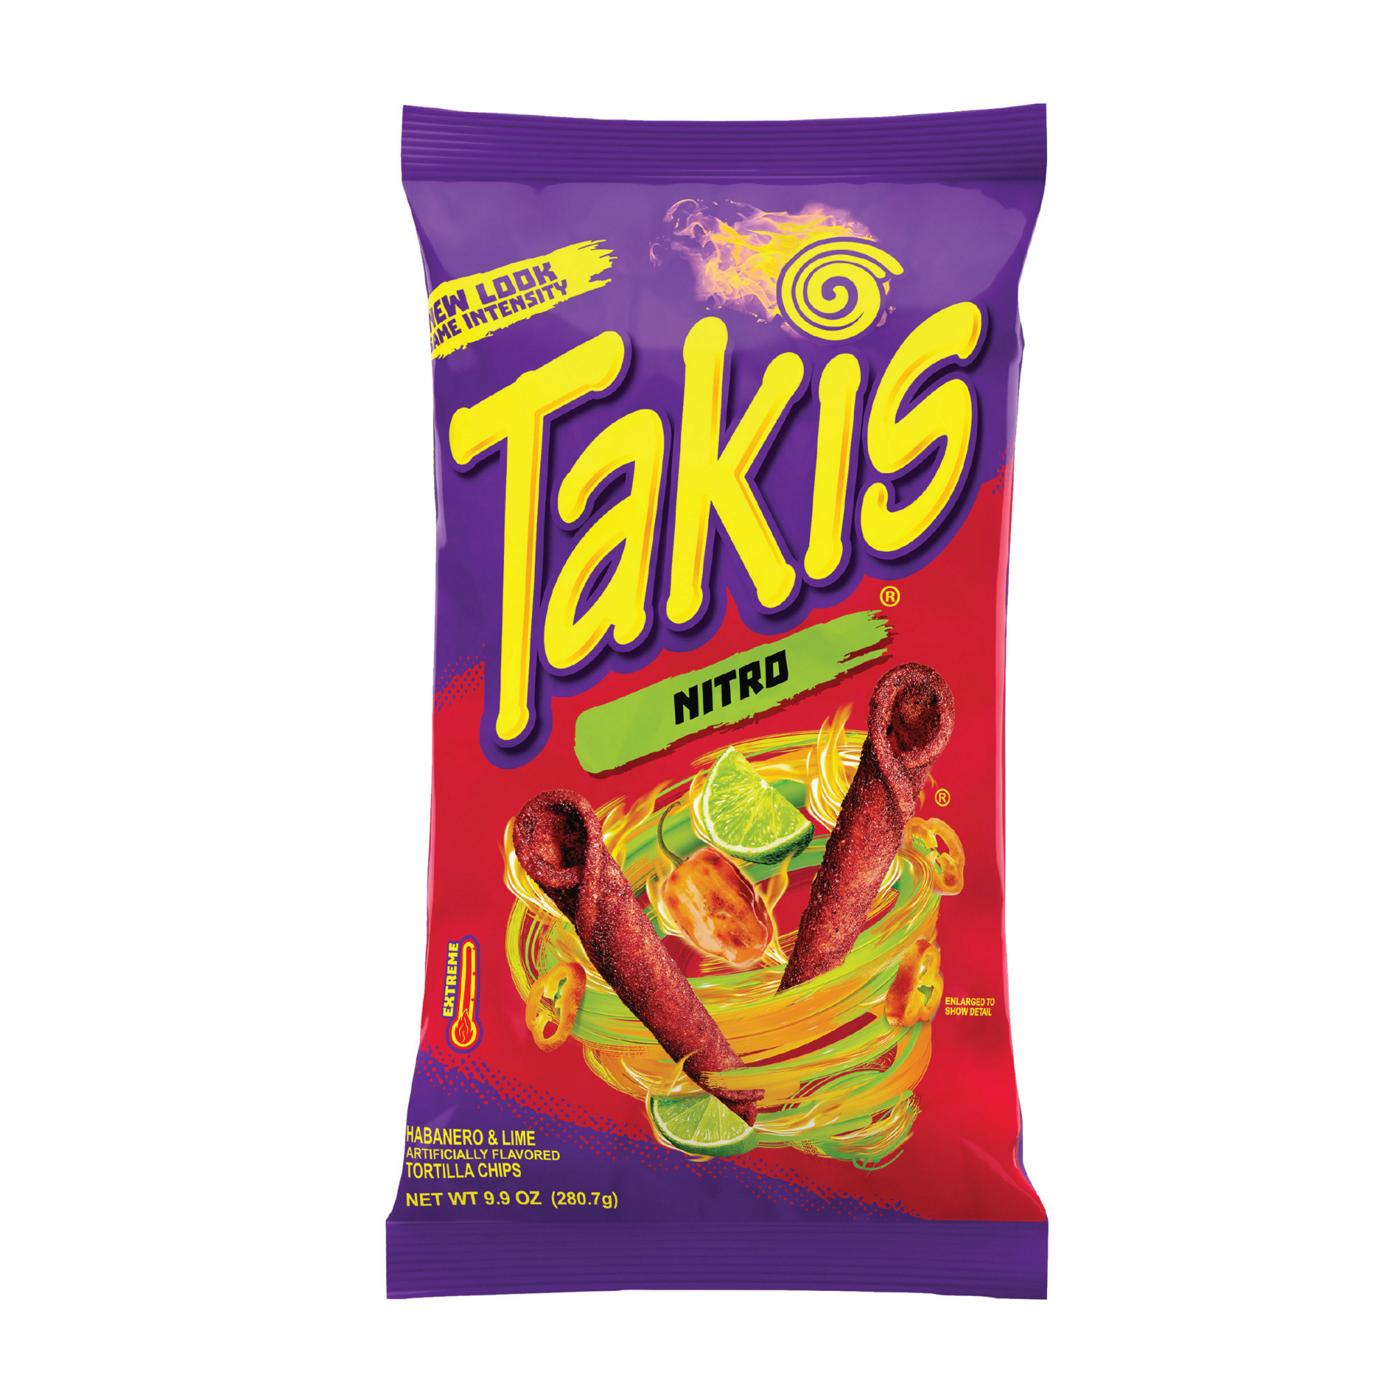 Takis Nitro Habanero & Lime Rolled Tortilla Chips; image 1 of 7